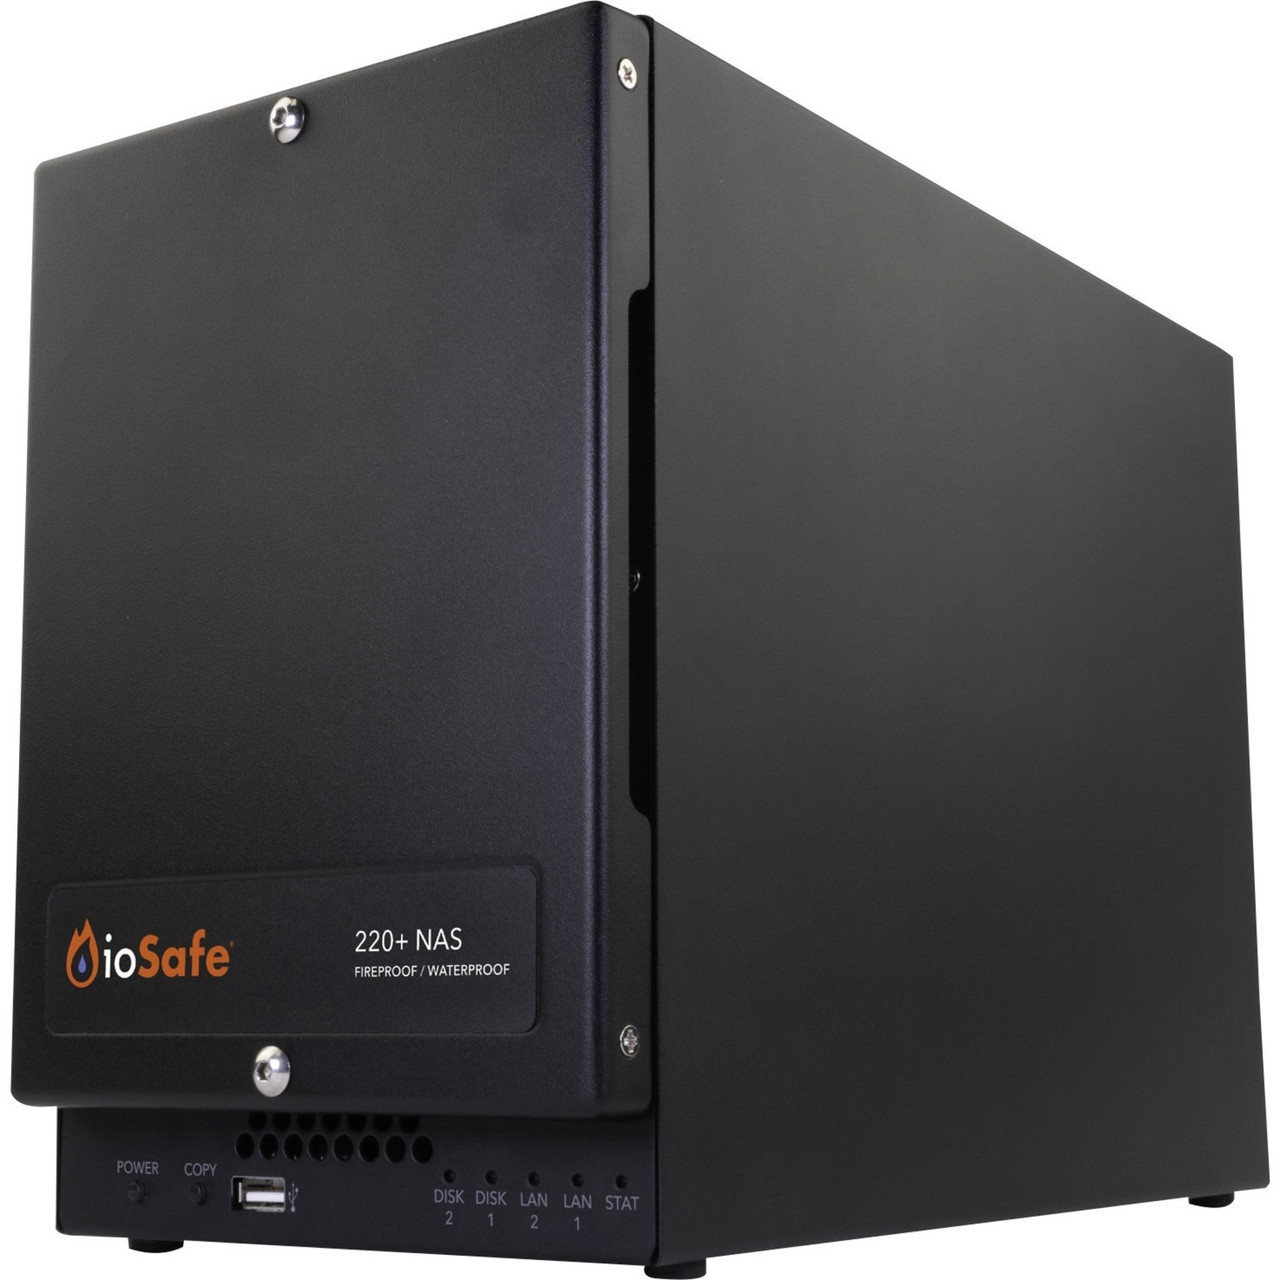 ioSafe 220+ SAN/NAS Storage System - 72200-3843-1500